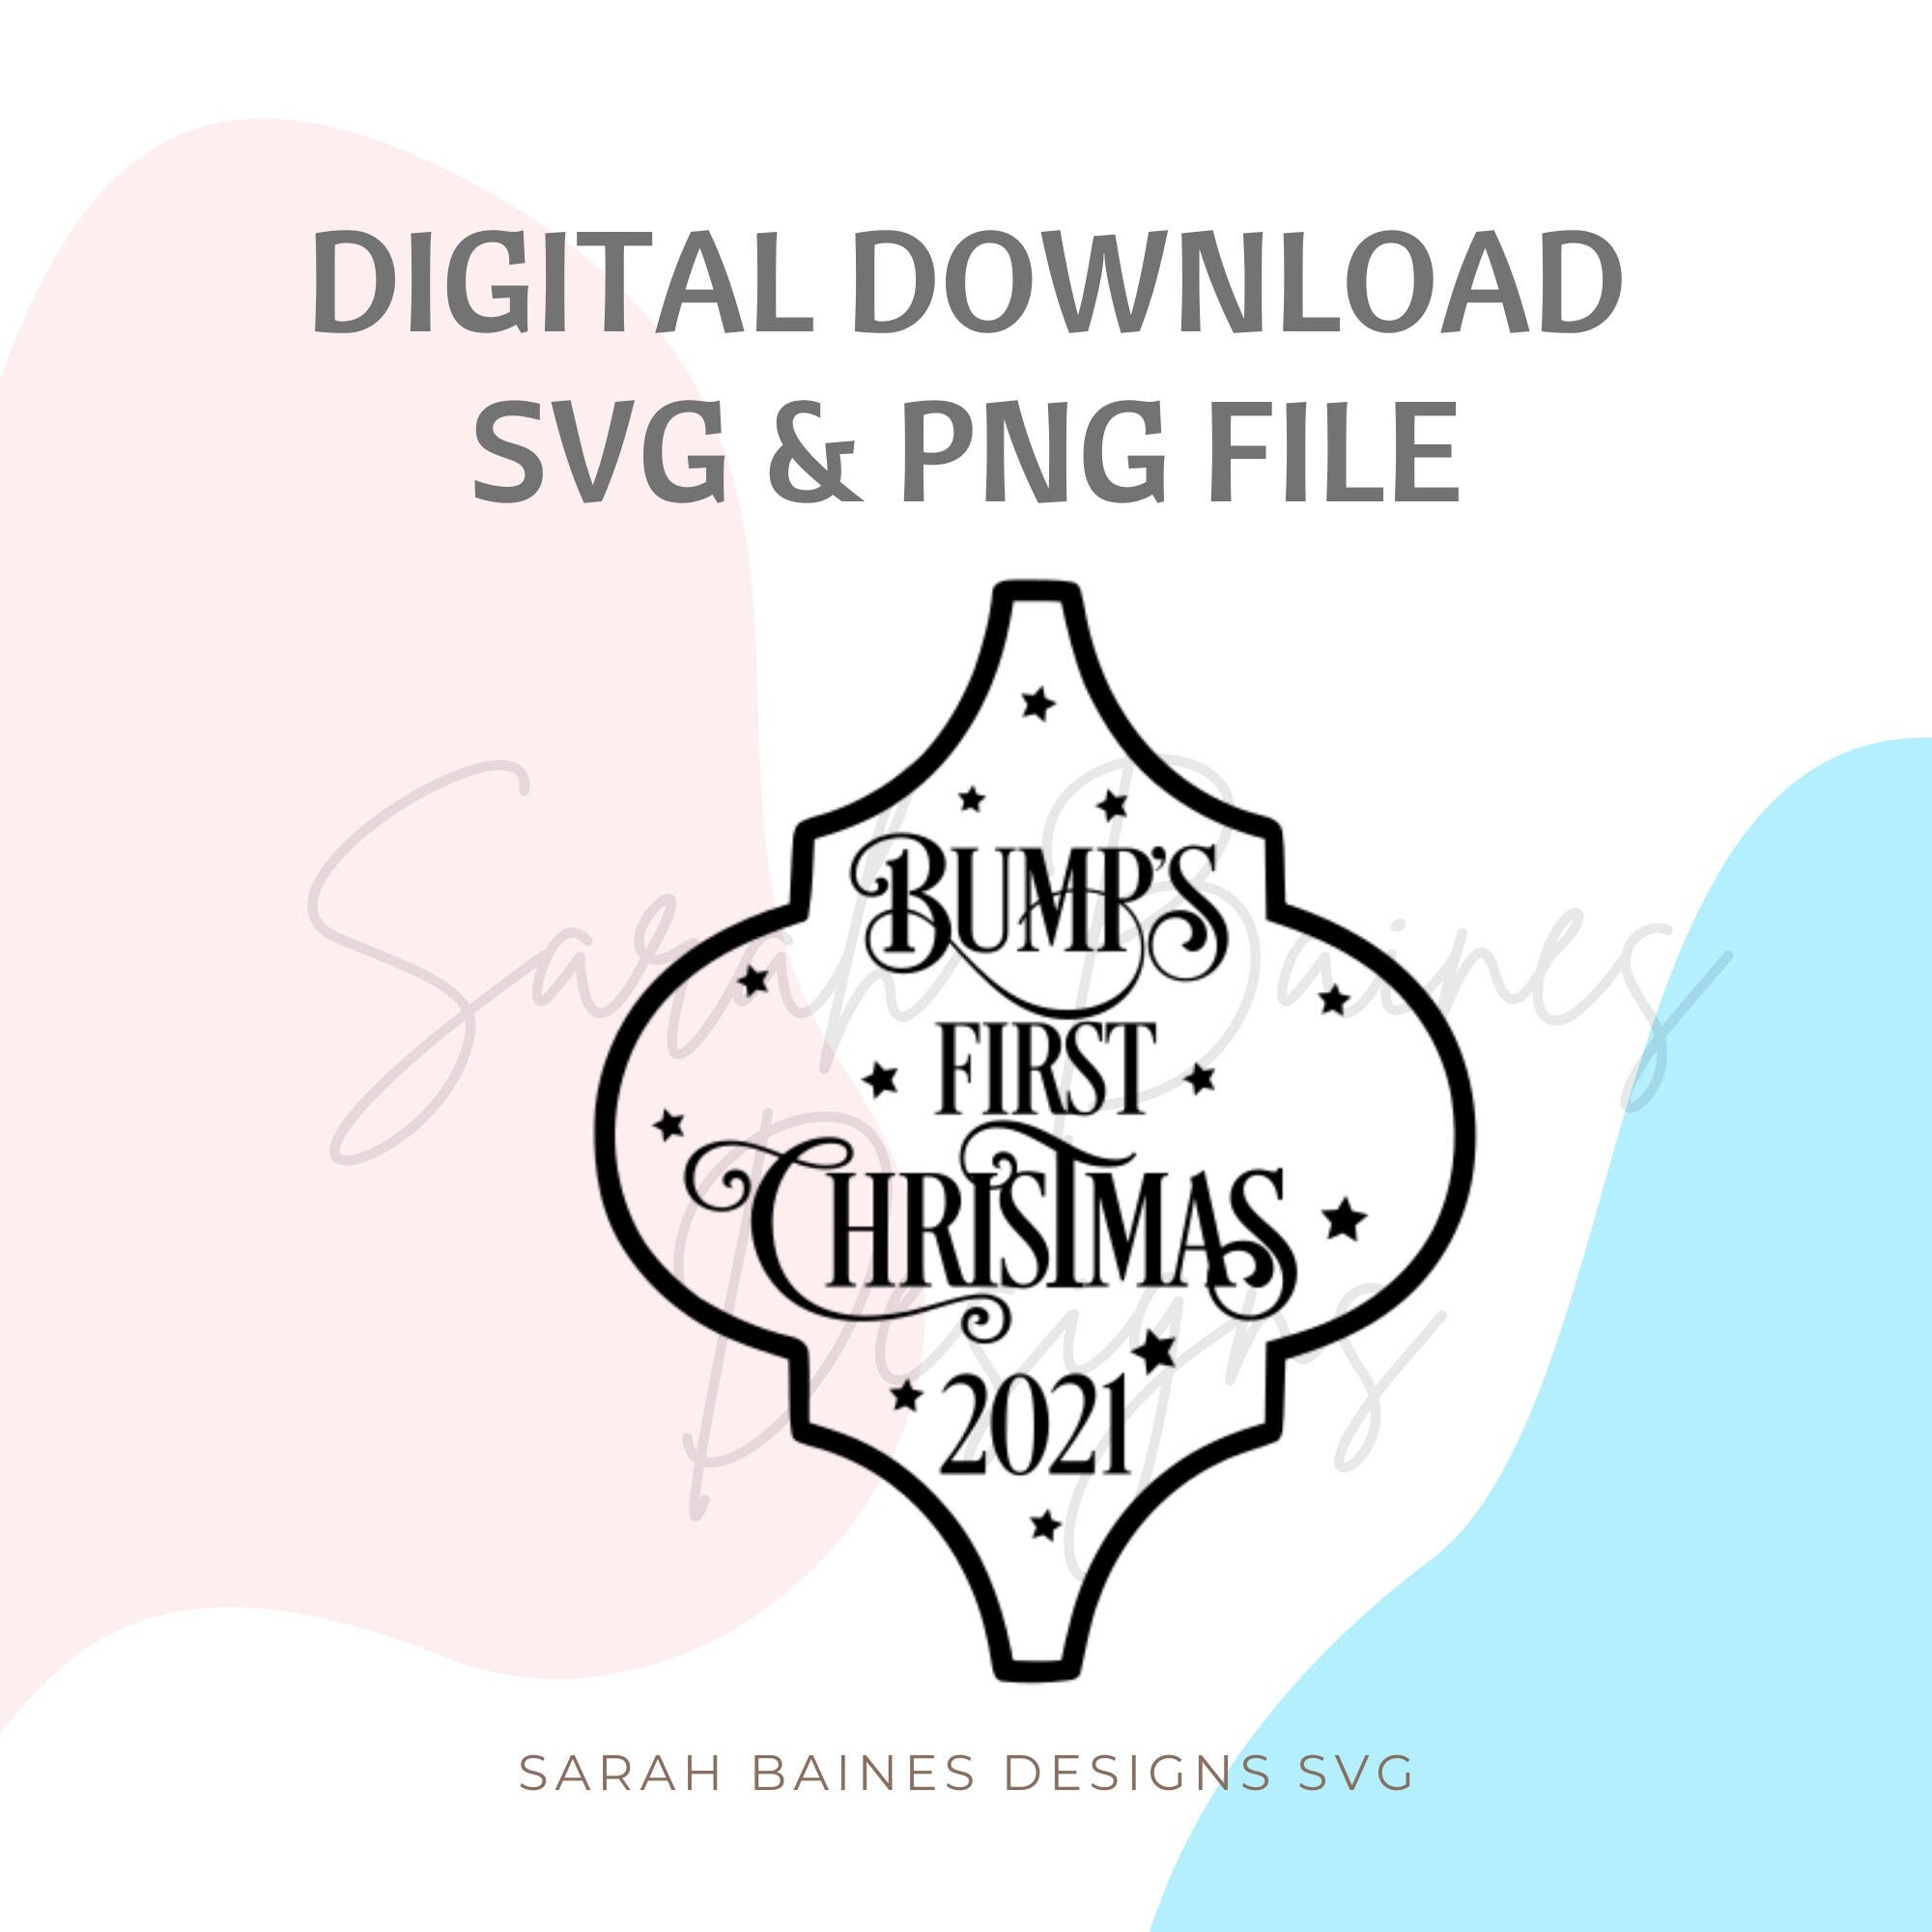 Bumps first christmas svg file, Christmas svg, desire pro svg, Christmas png, Cricut cut files